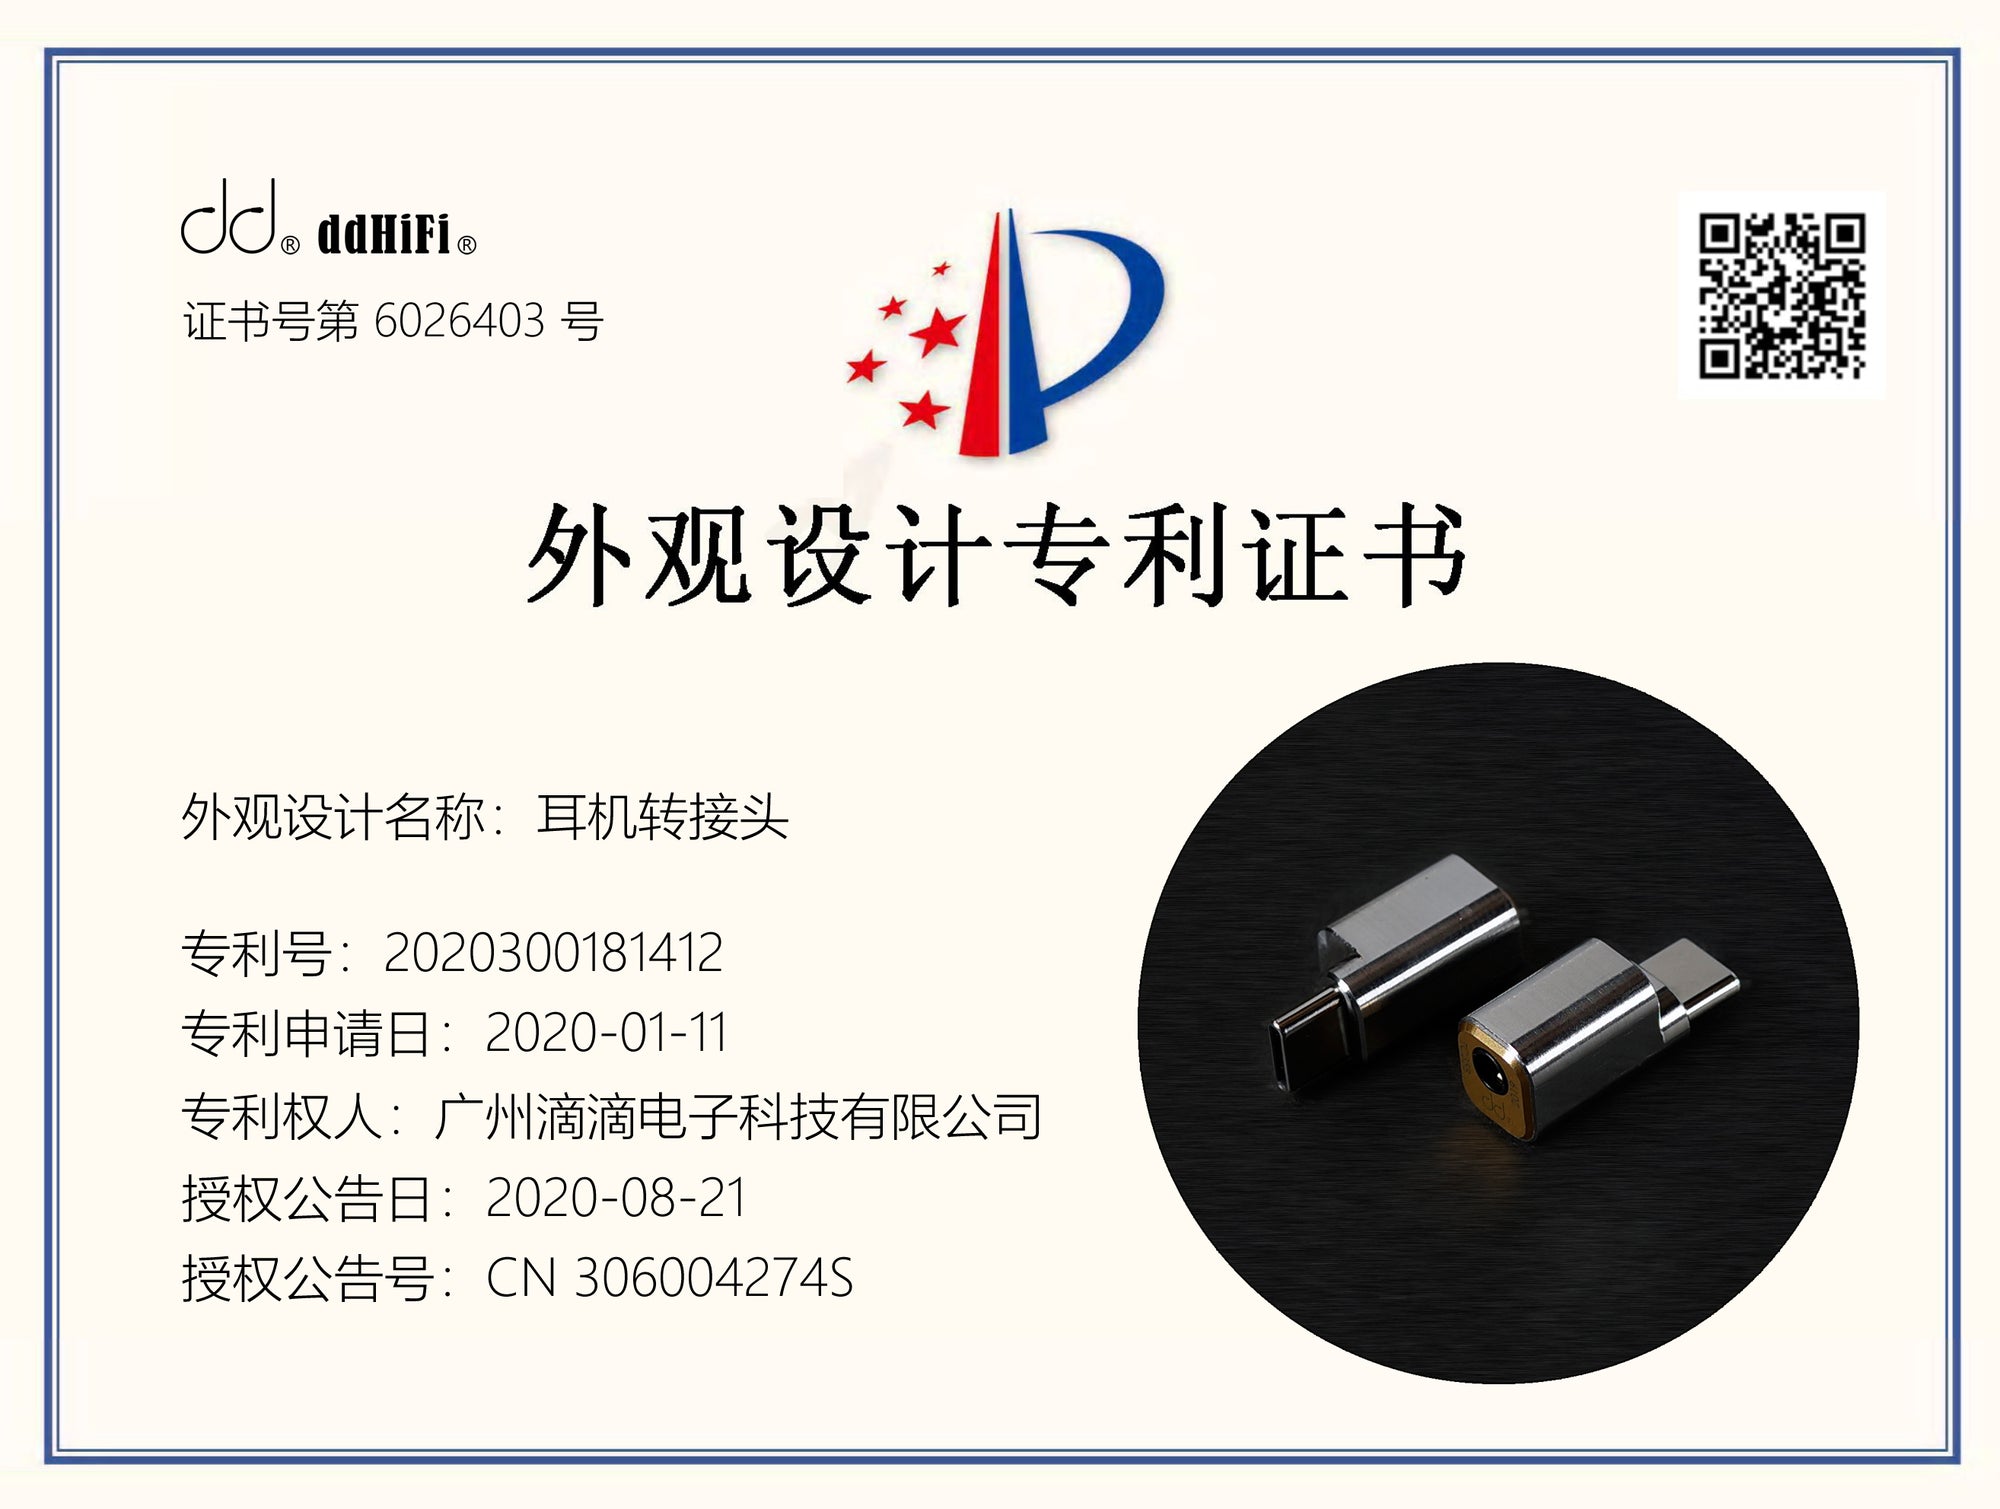 DDHIFI TC35B/TC35i USB type-C/lightning to Jack 3.5 Cable Adapter